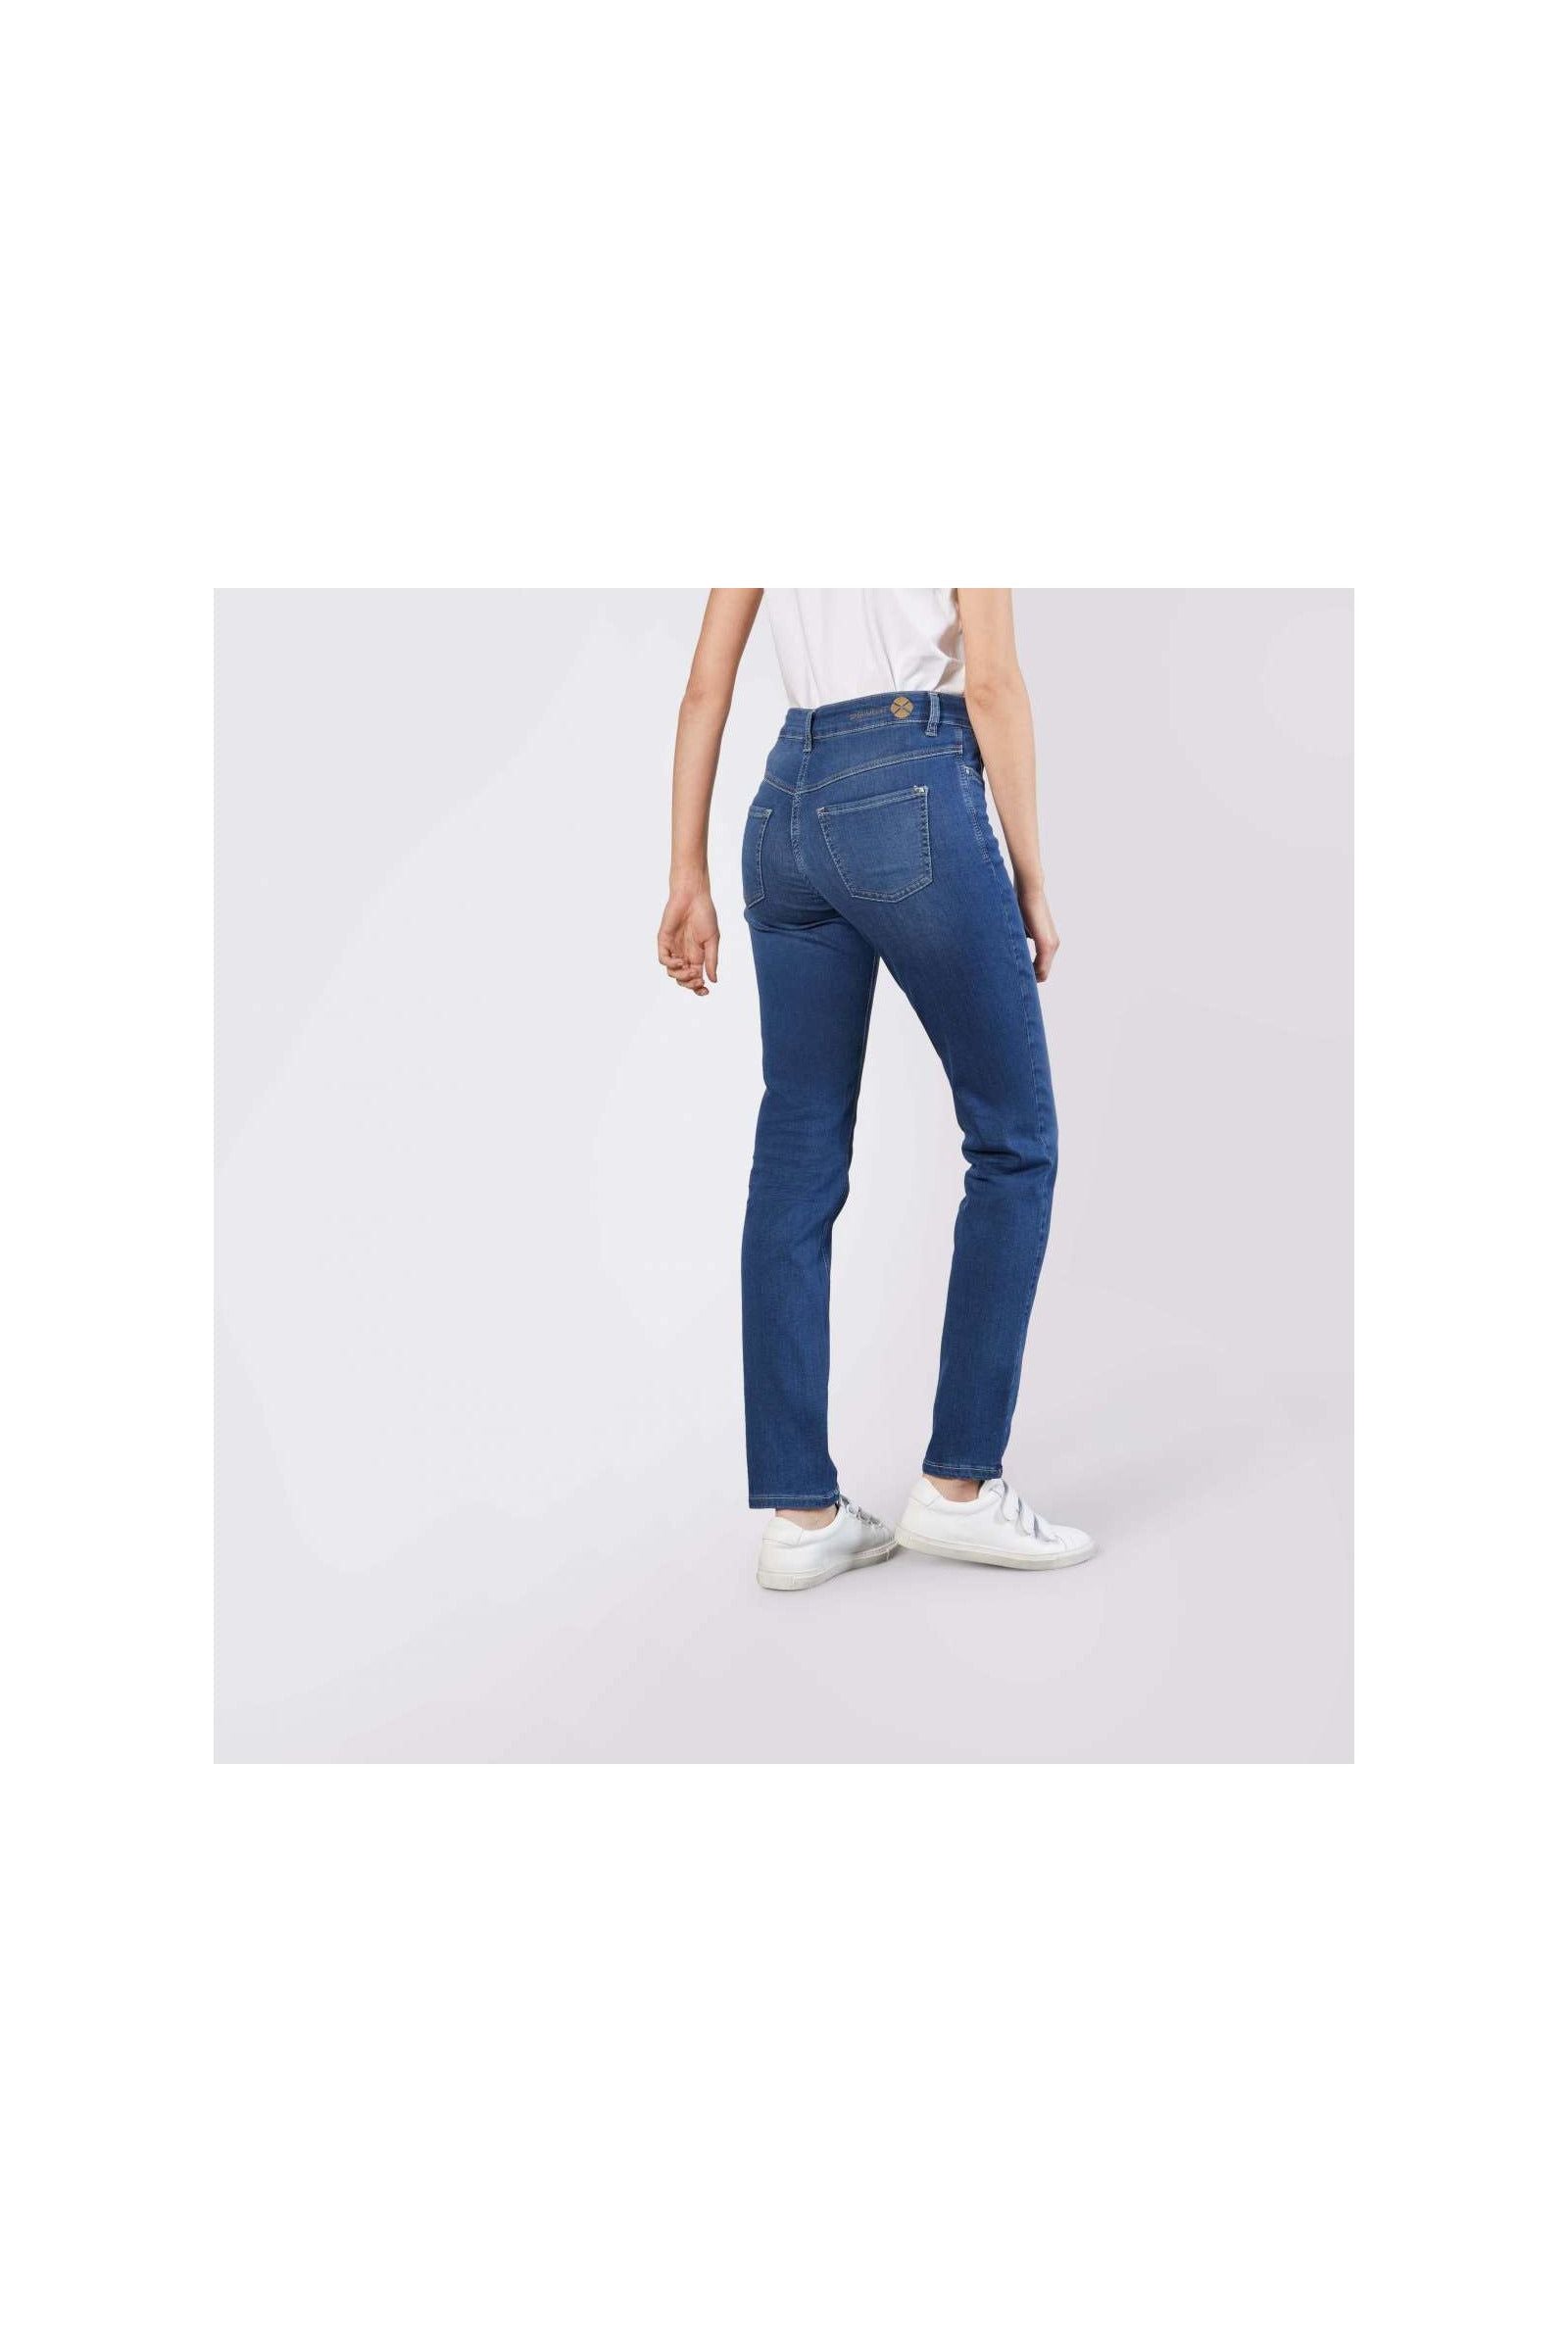 Mac Jeans Dream Denim Madison | 5401-90-355L Straight Authe Blue D569 Robertson Mid – Legs